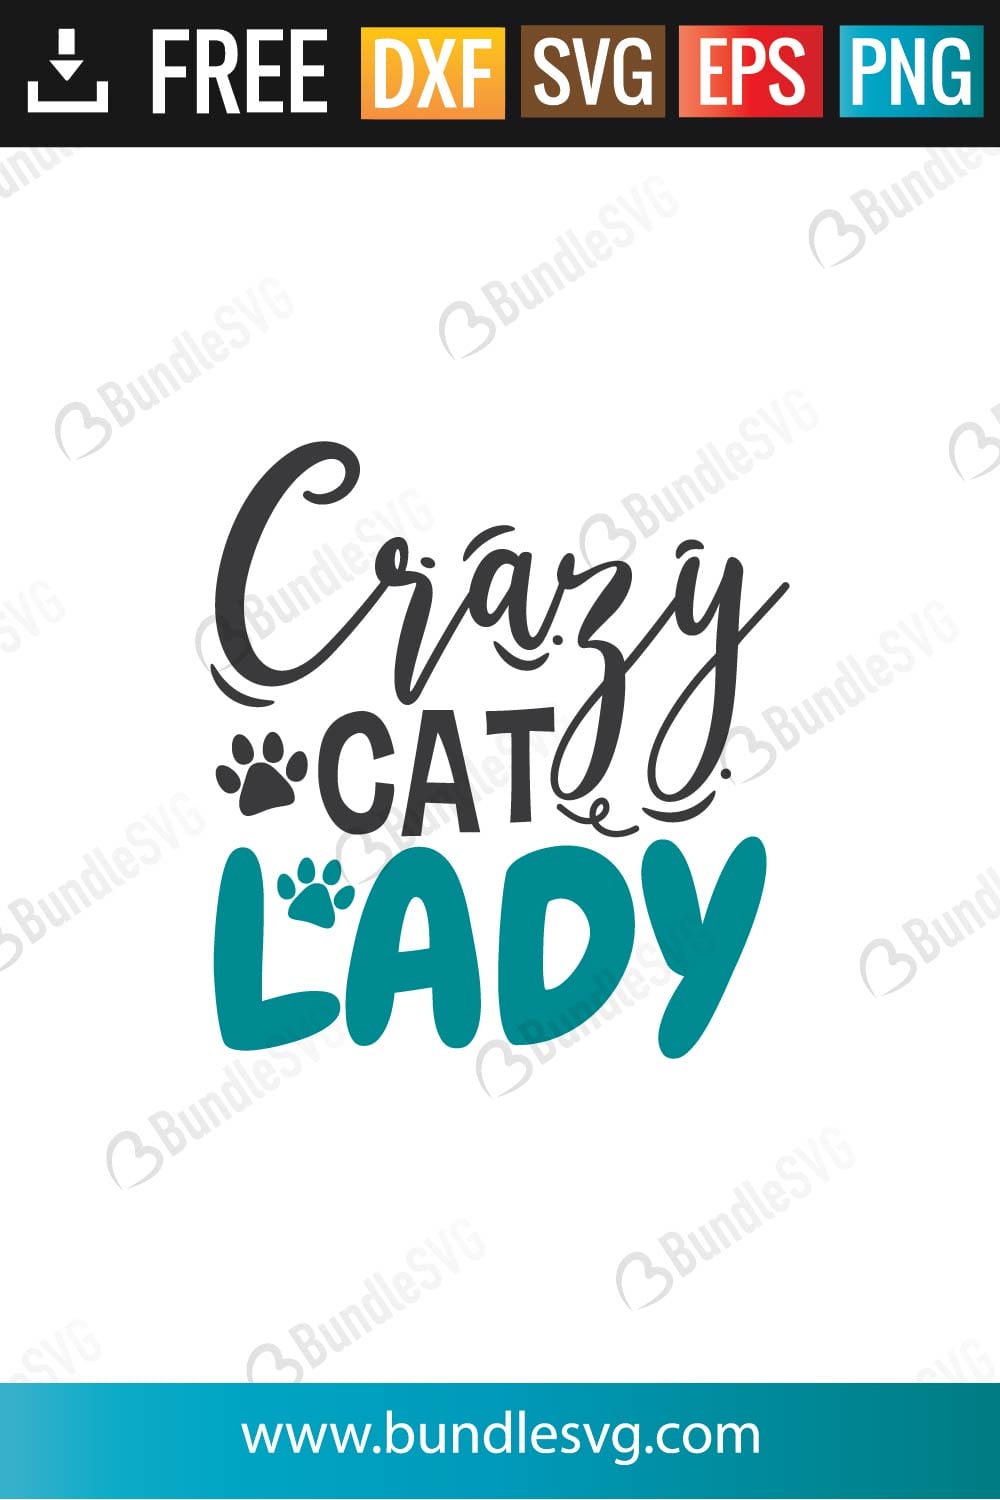 Crazy Cat Lady SVG Cut Files Free Download | BundleSVG.com